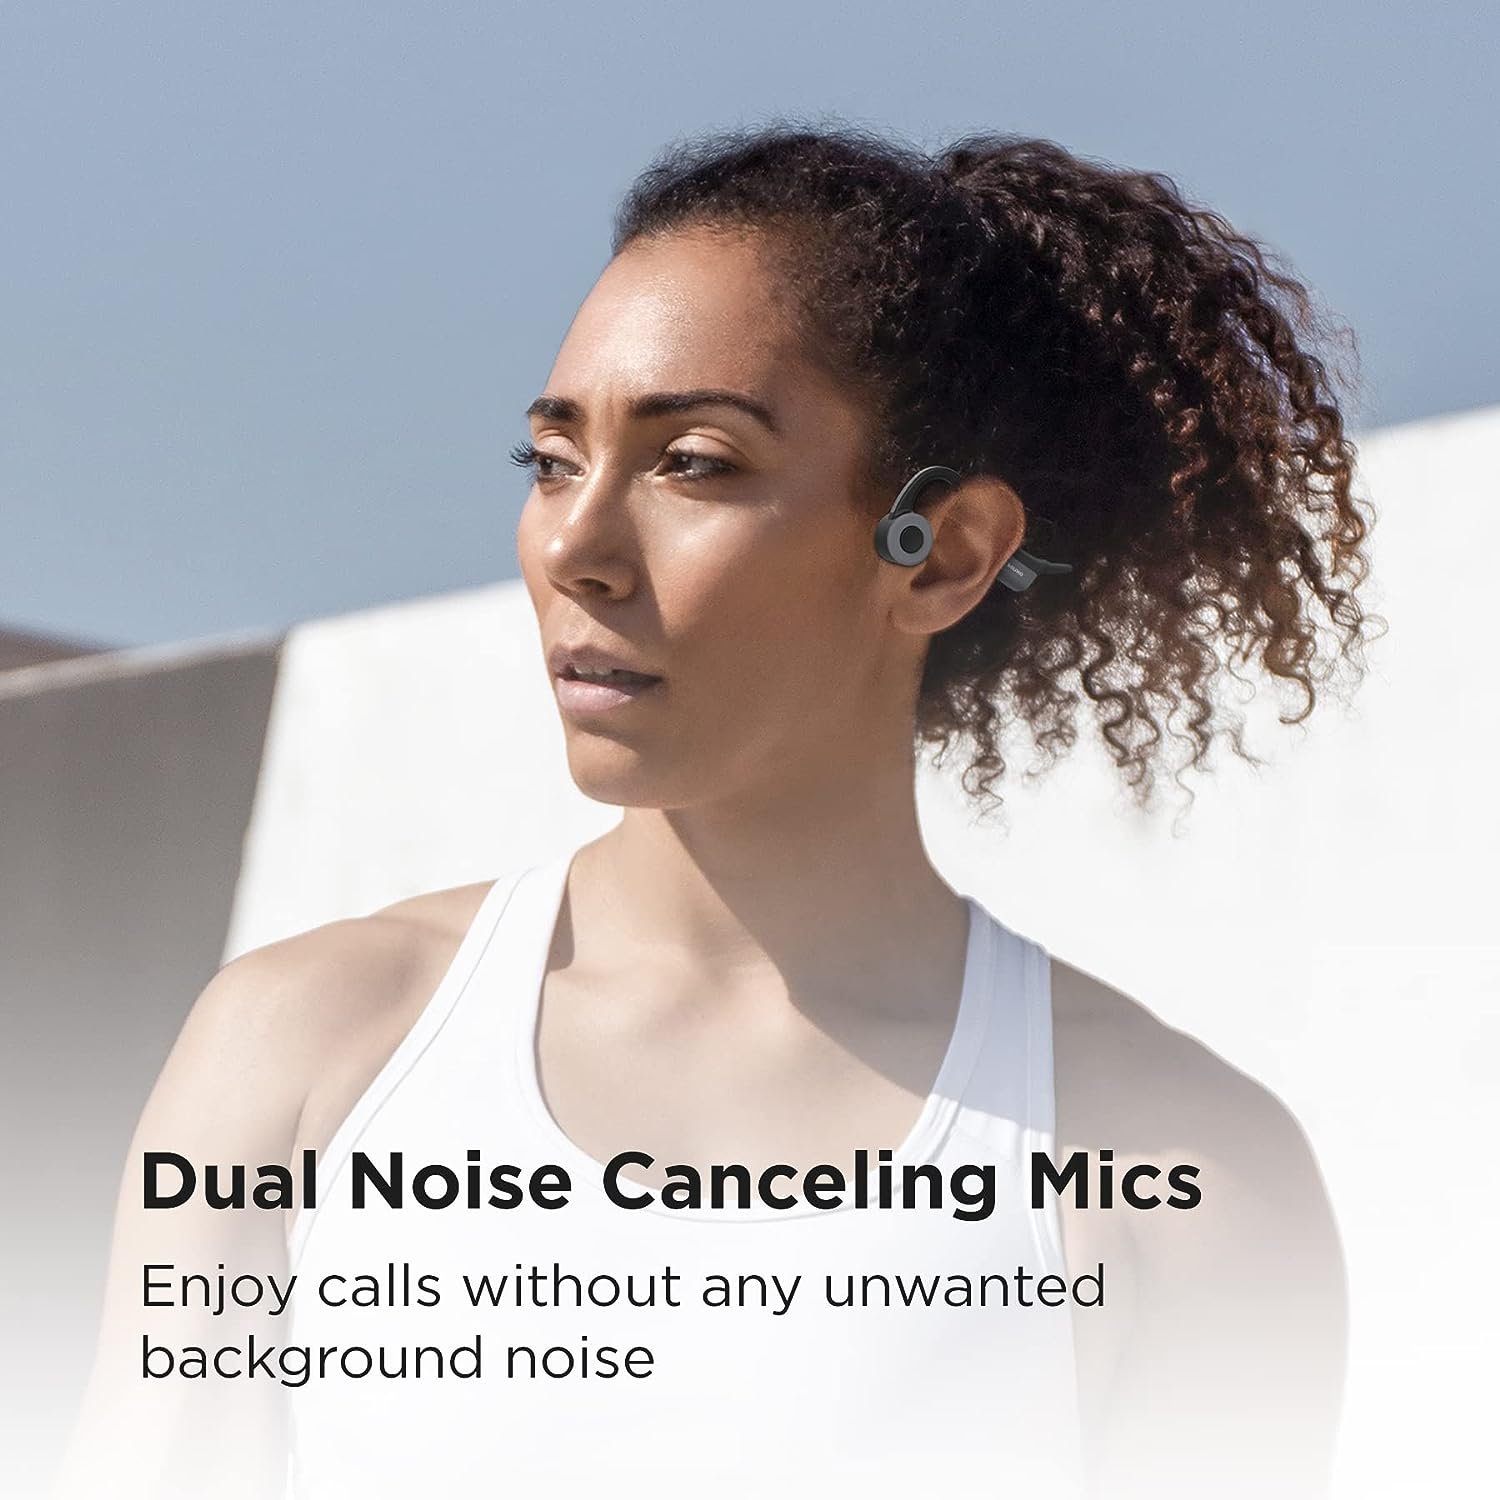 OPN Sound Dashlyte Bluetooth® Bone-Conduction LED-Neckband Headphones with Microphone, Black